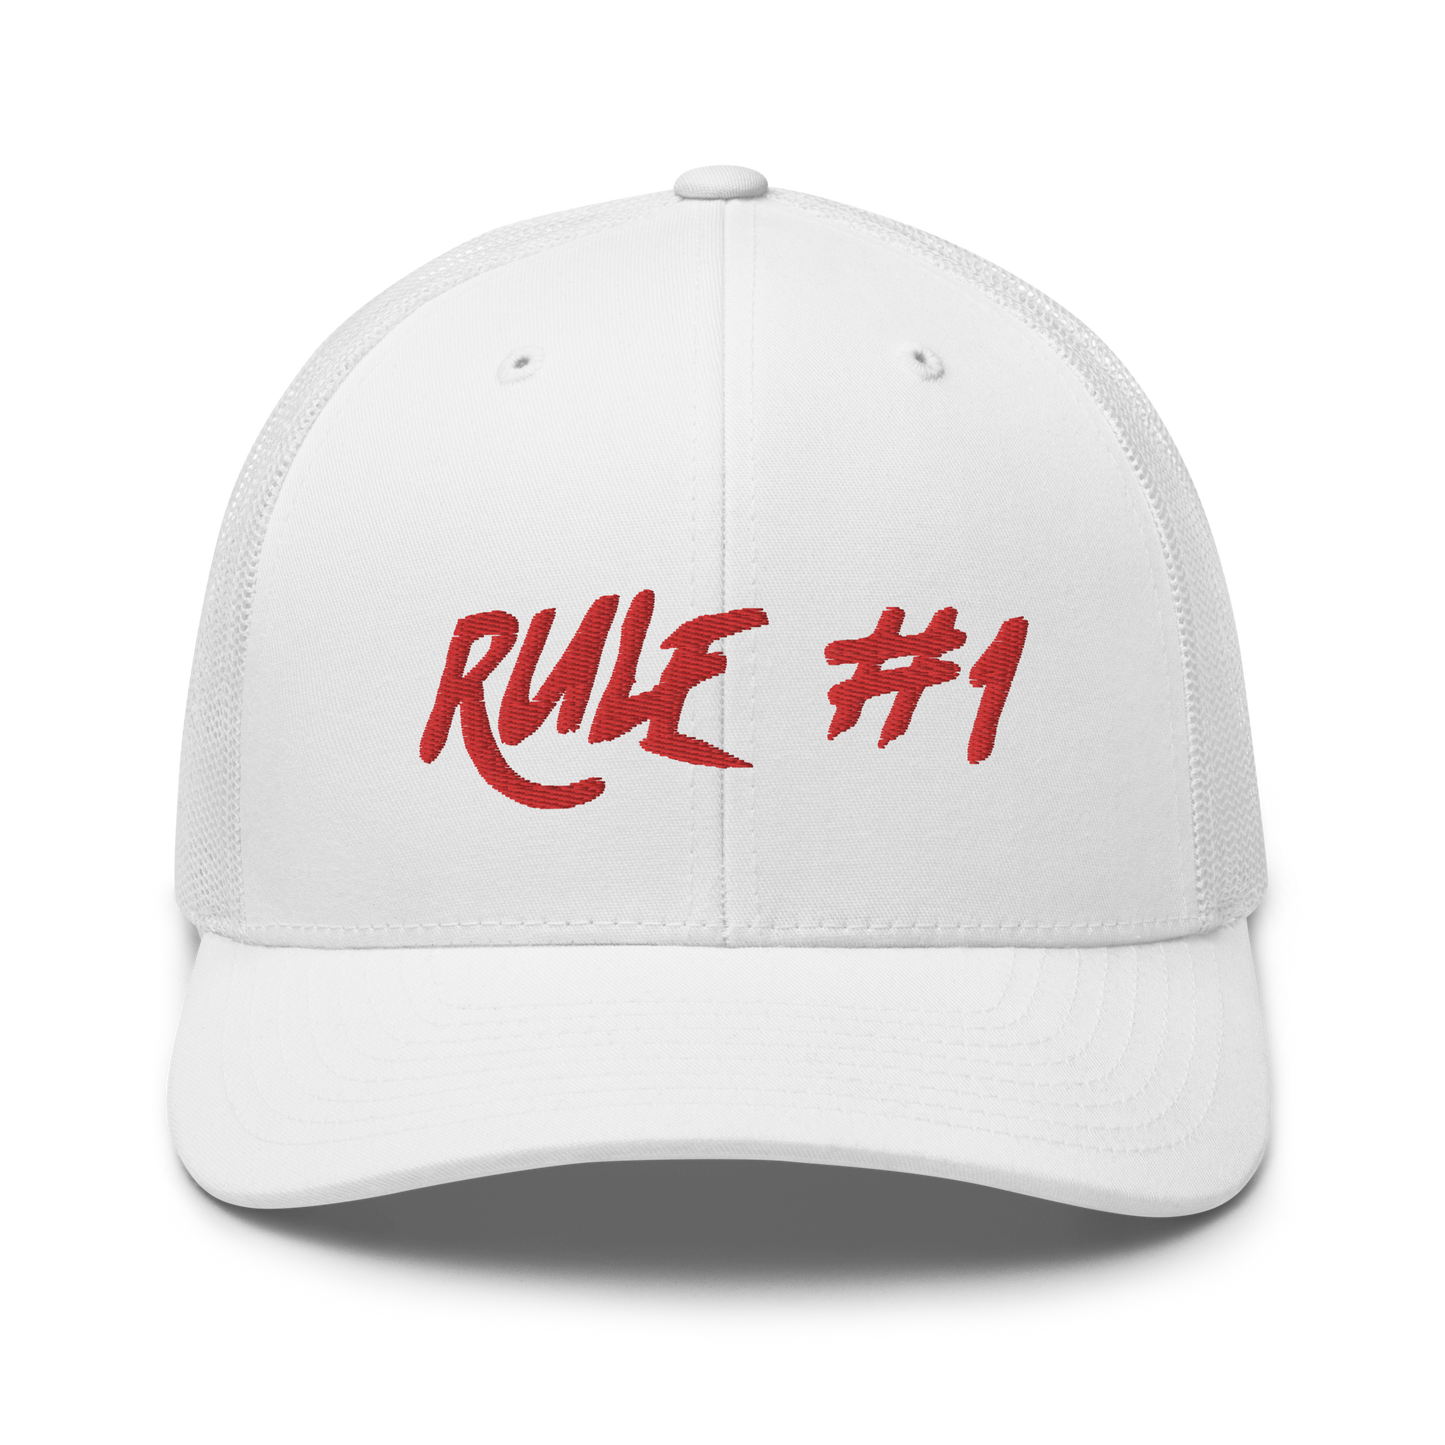 AlphaBroVR Retro Rule 1 Trucker Hat